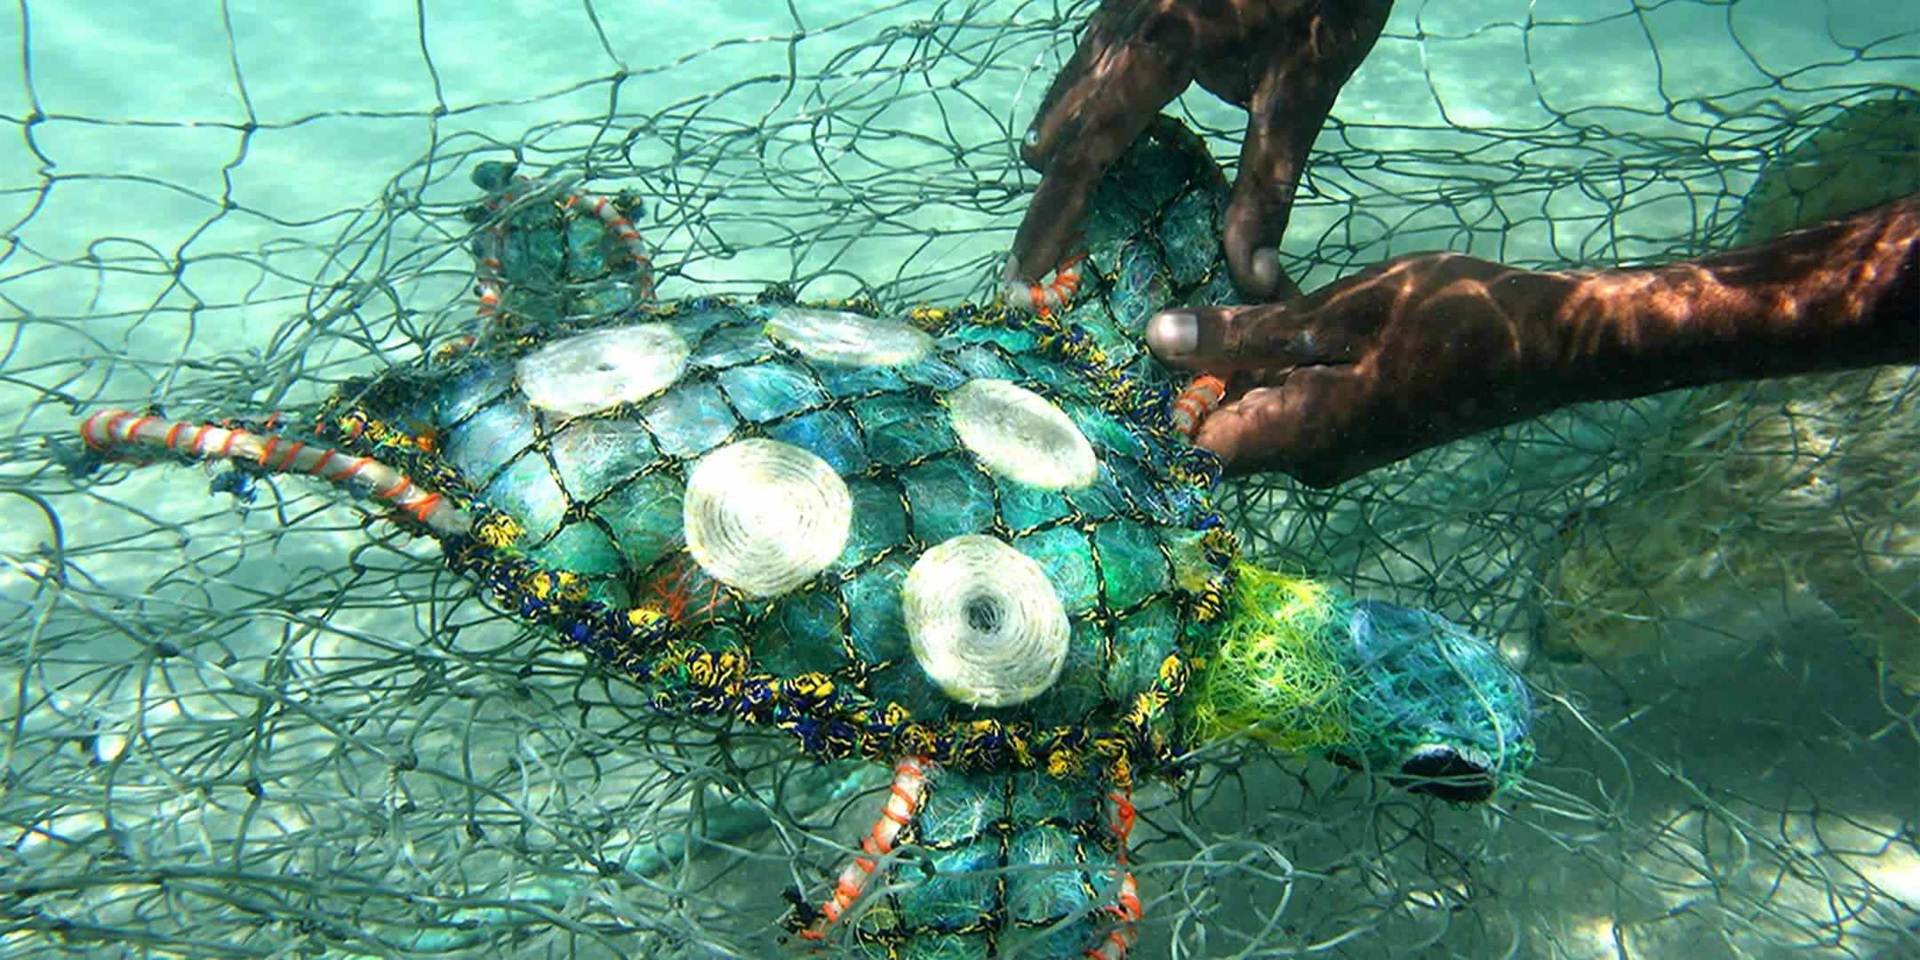 Ghost Fishing Nets Killing Marine Life